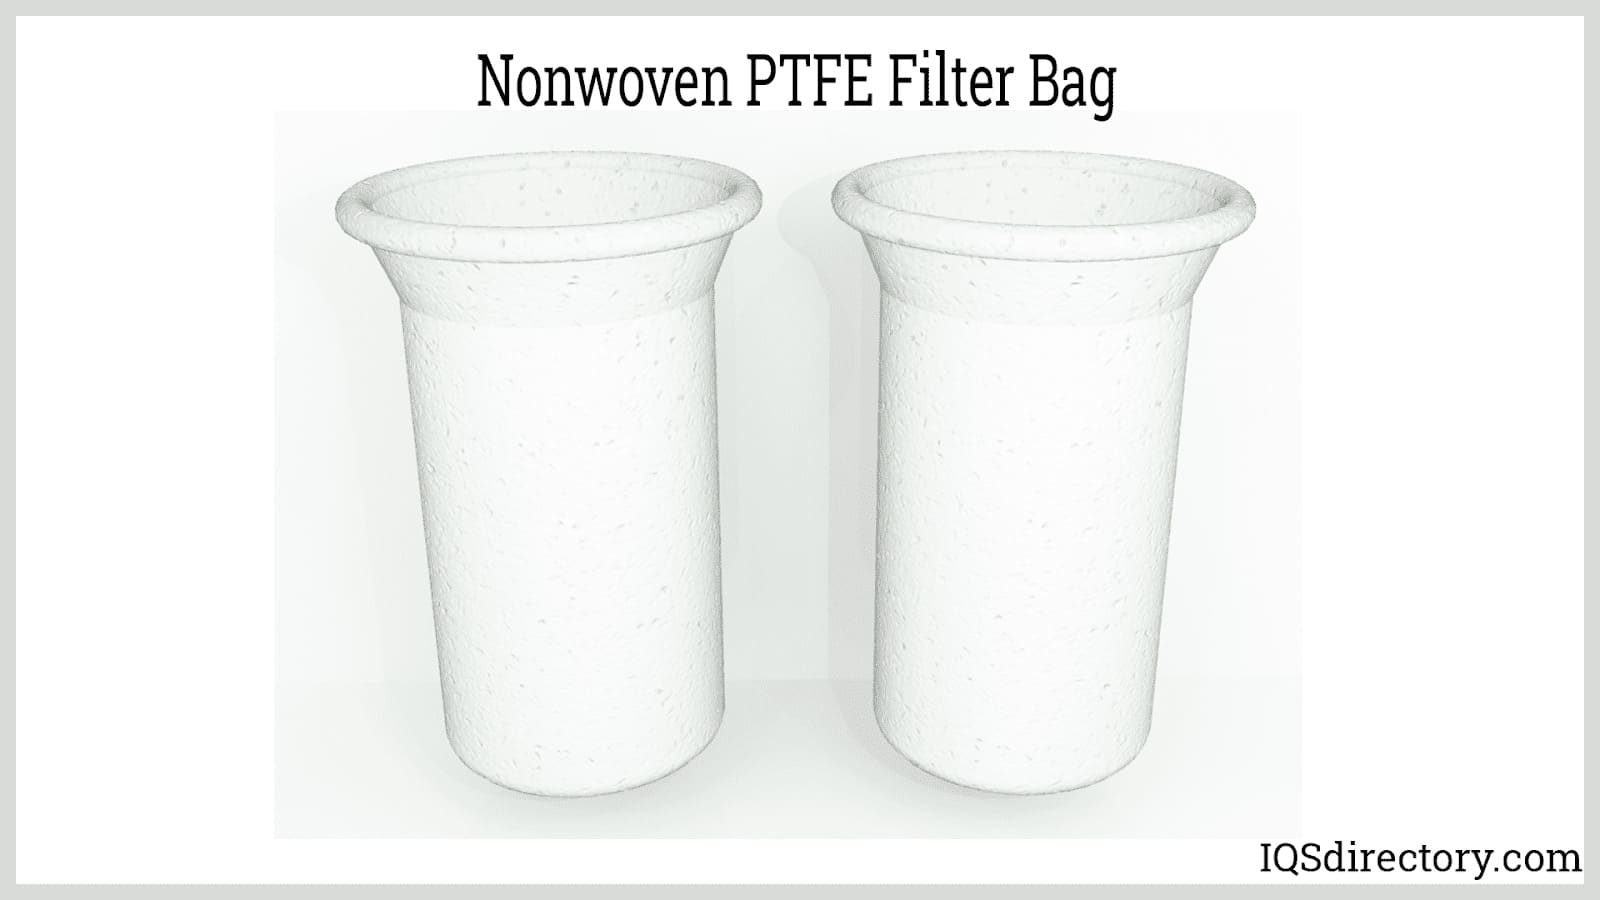 Nonwoven PTFE Filter Bag